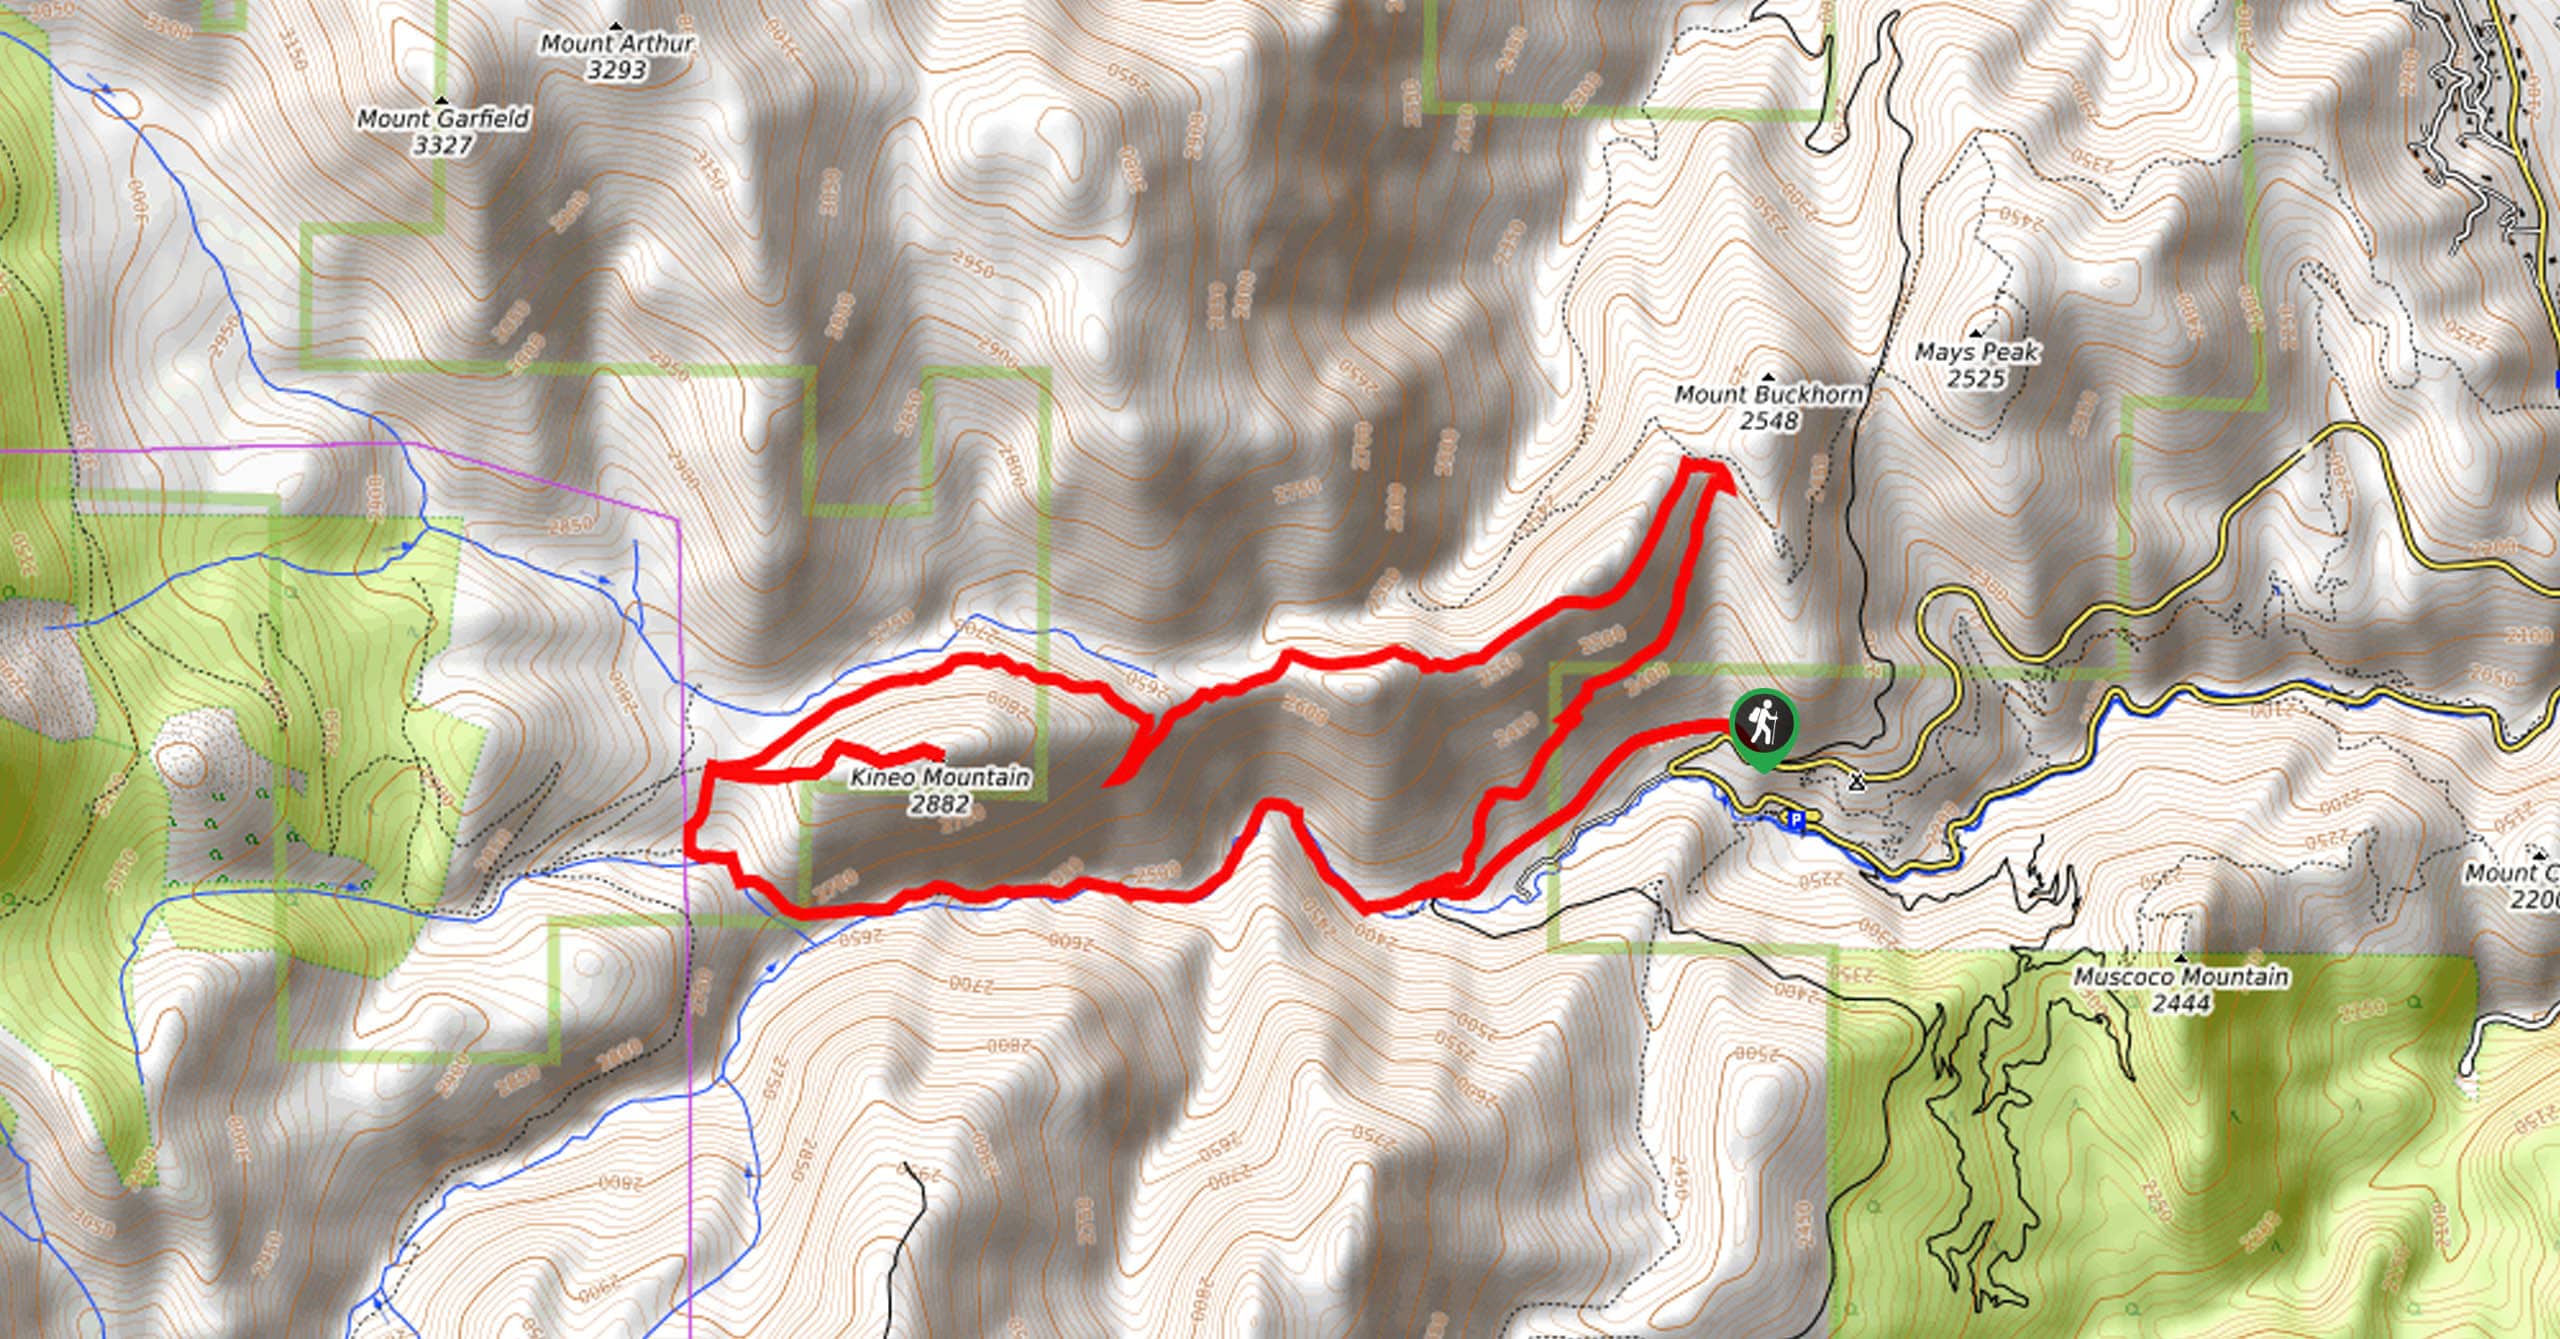 Kineo Mountain and Mount Buckhorn via Seven Bridges Trail Map